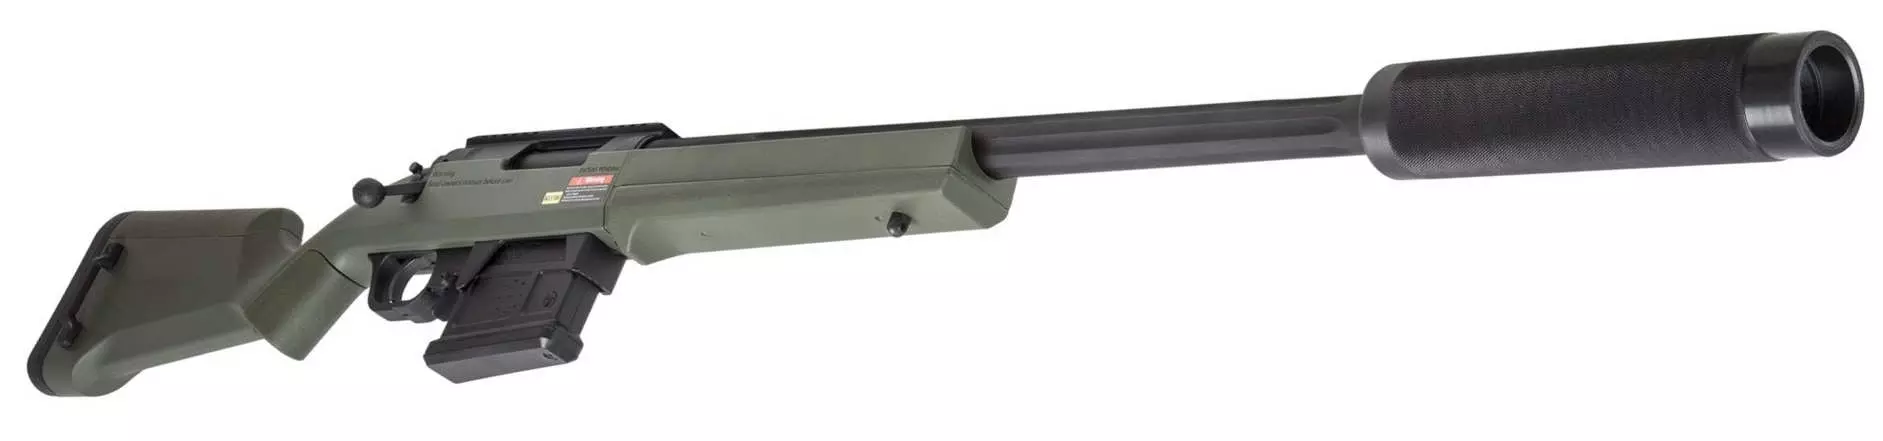 Remington 700 laser tag sniper rifle optical system 